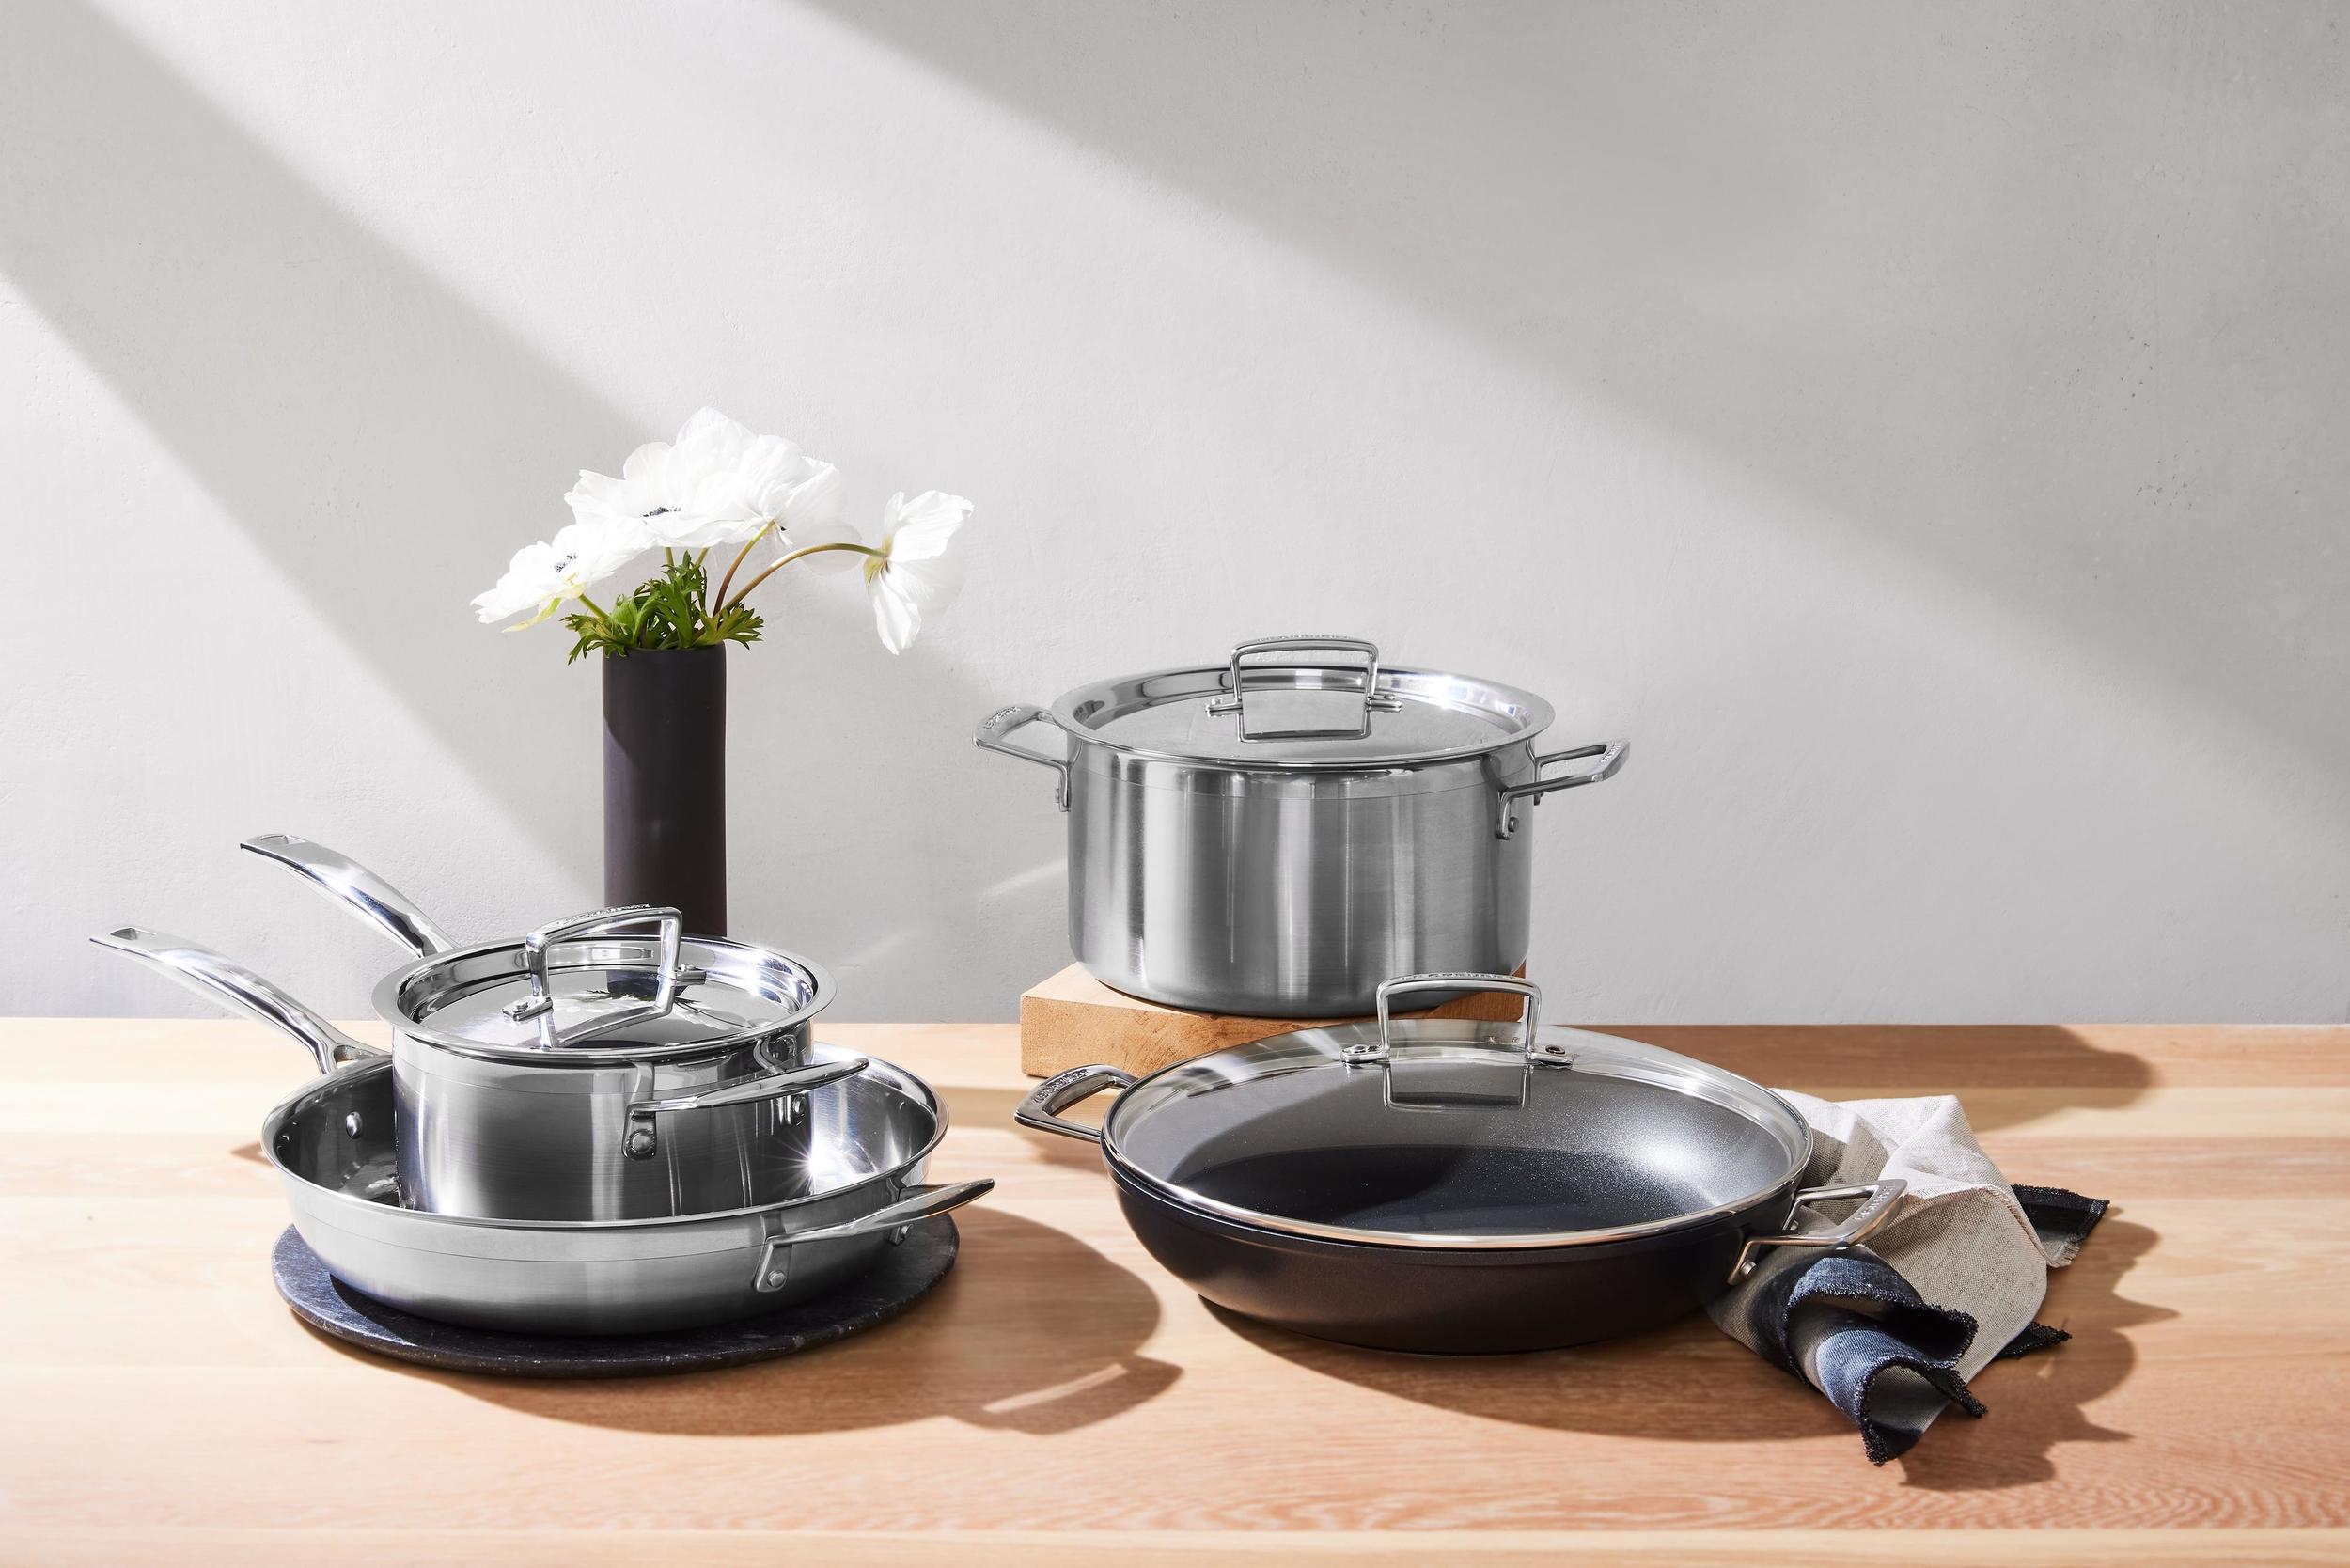 https://3fa-media.com/le-creuset/le-creuset-le-creuset-cooking-pot-non-stick-aluminum-with-handles__126855_dbd36cf-s2500x2500.jpg